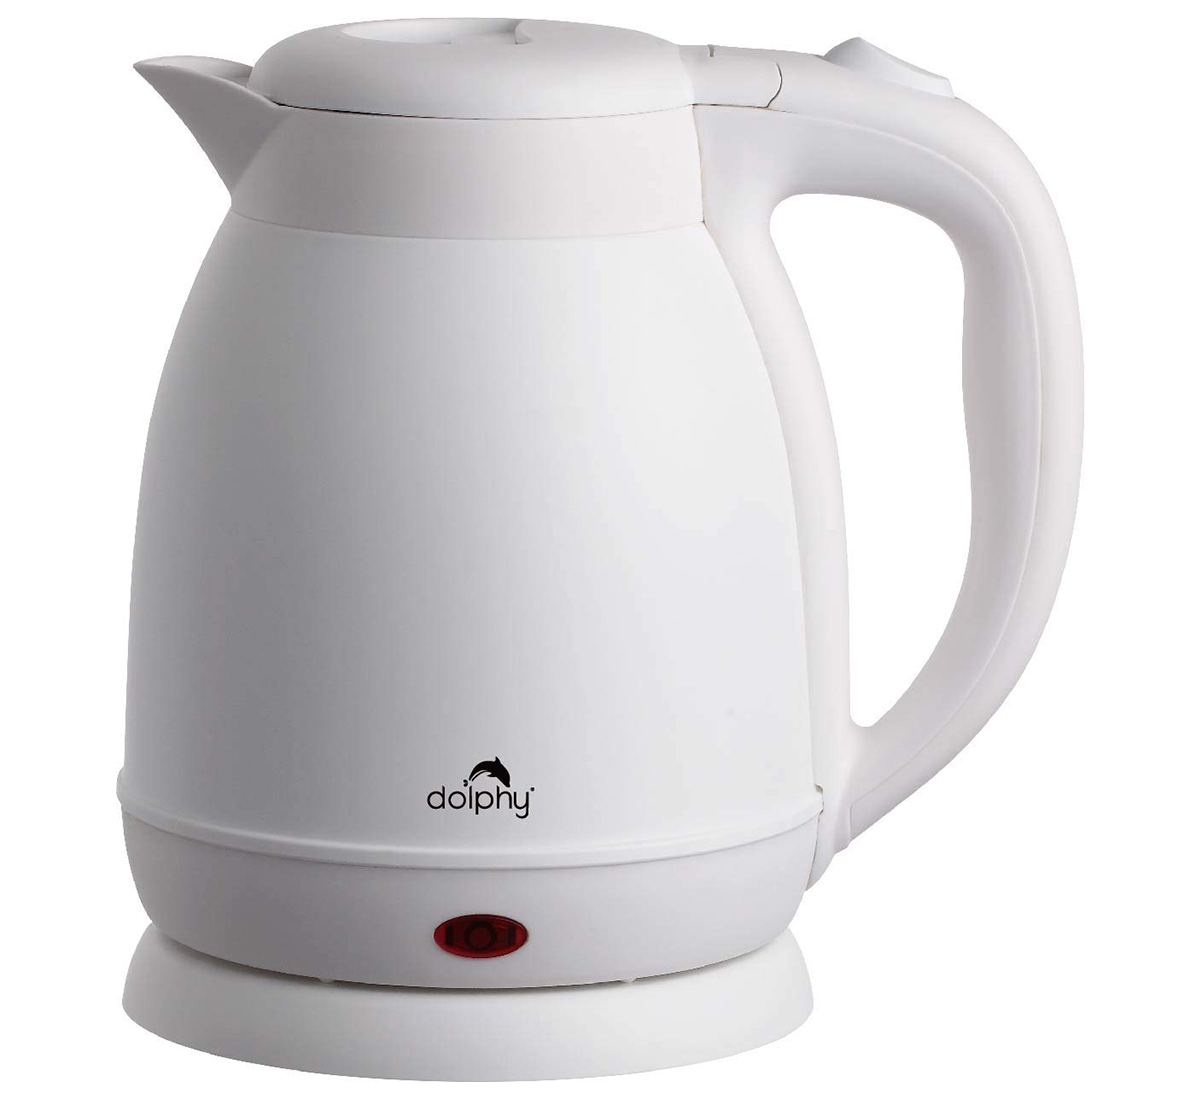 Matte white electric kettle 1.2L capacity